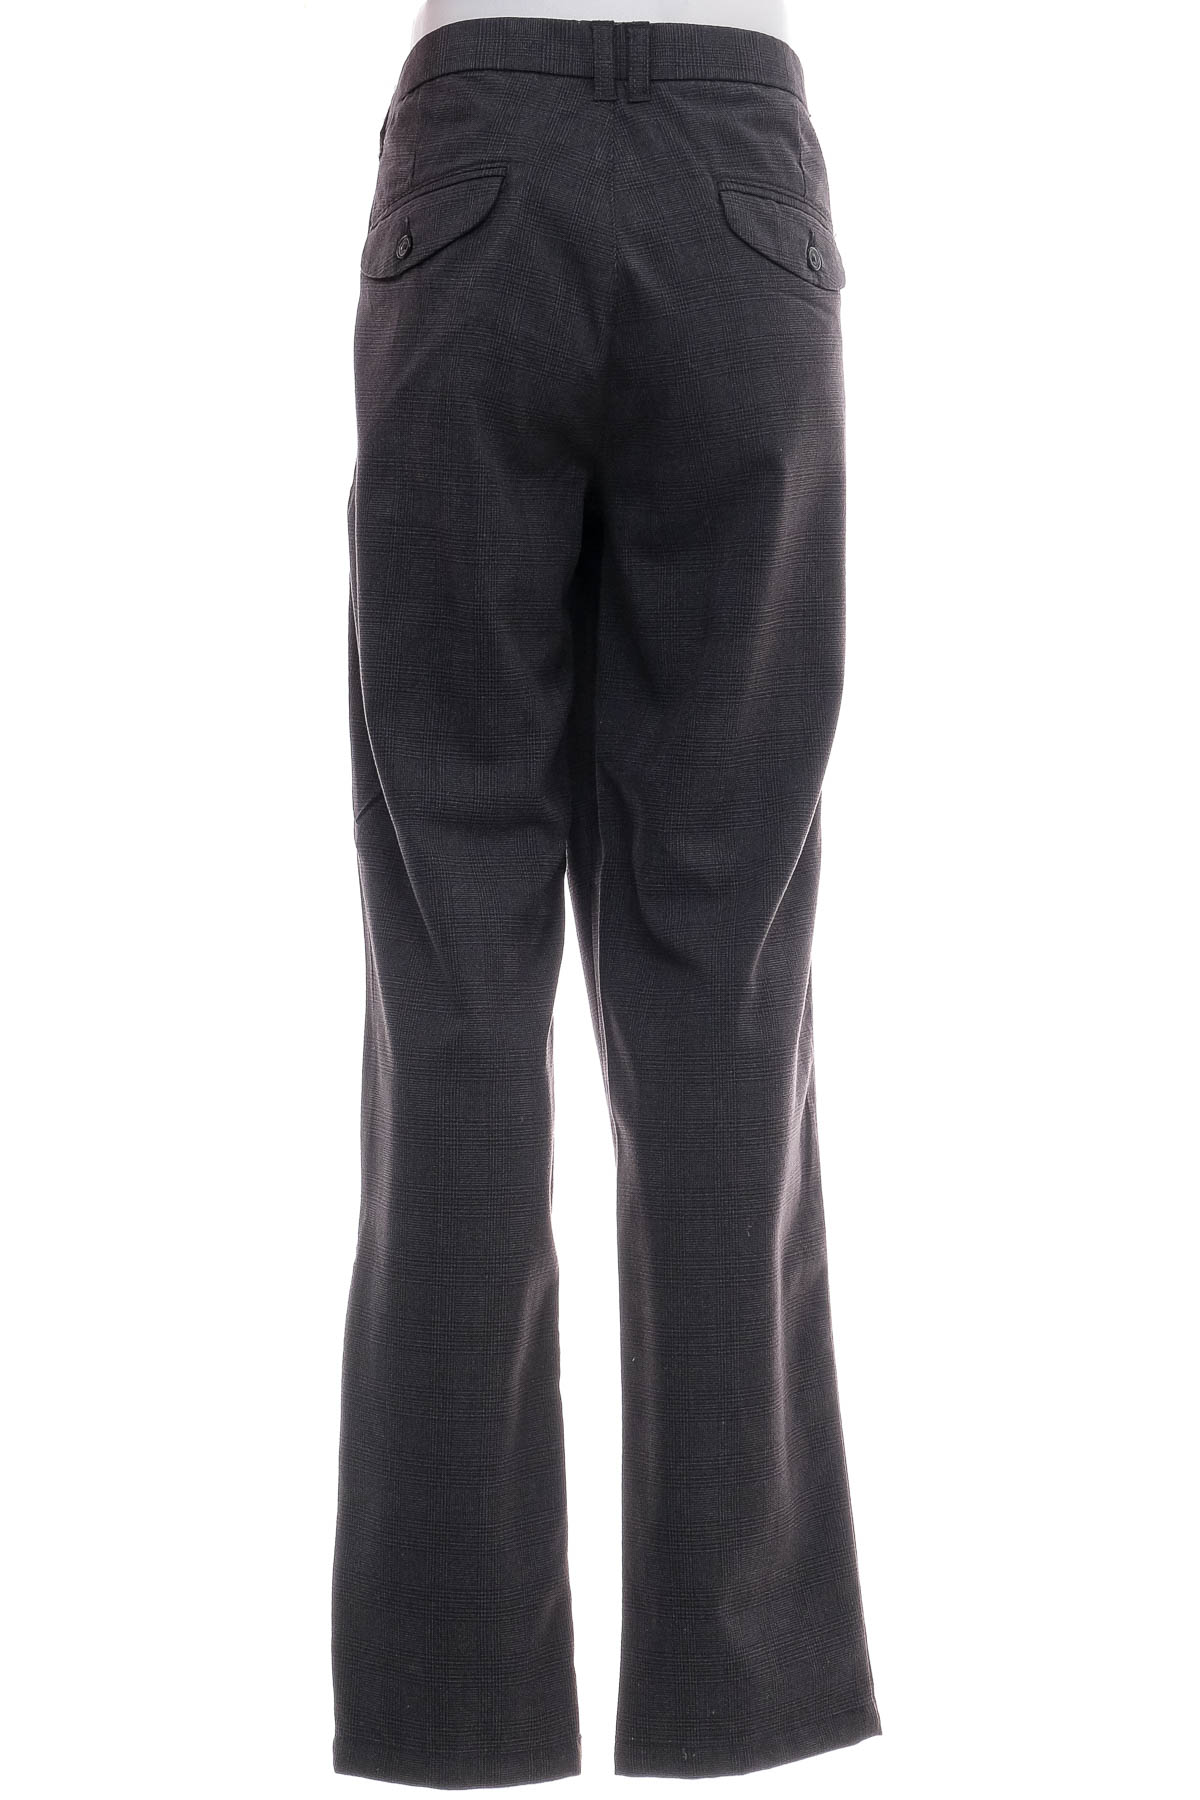 Pantalon pentru bărbați - Royal Class - 1